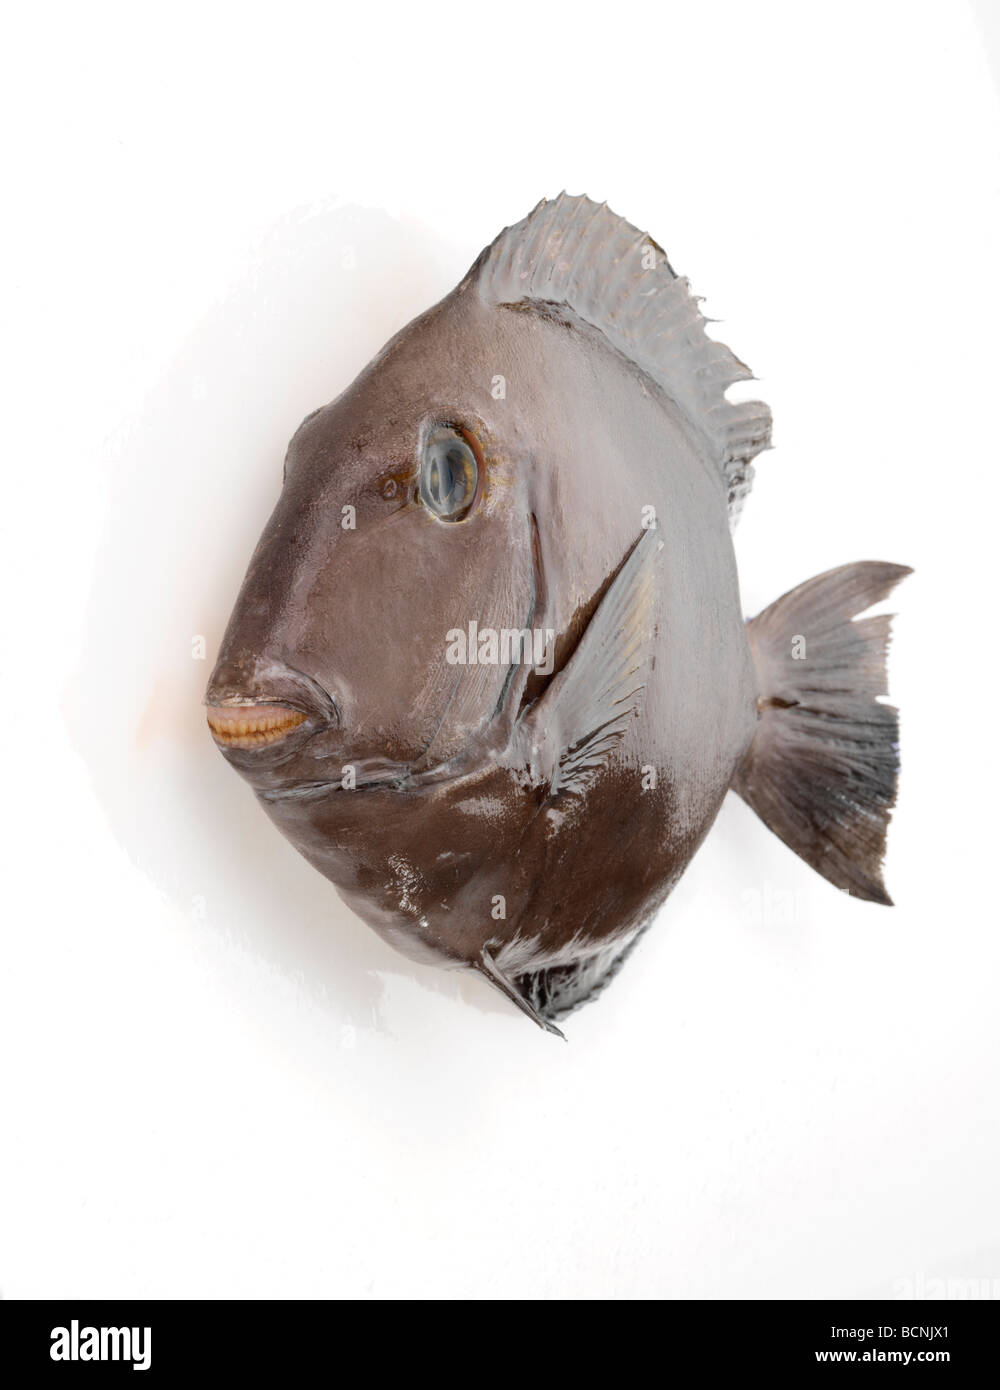 Garra rufa fish hi-res stock photography and images - Alamy